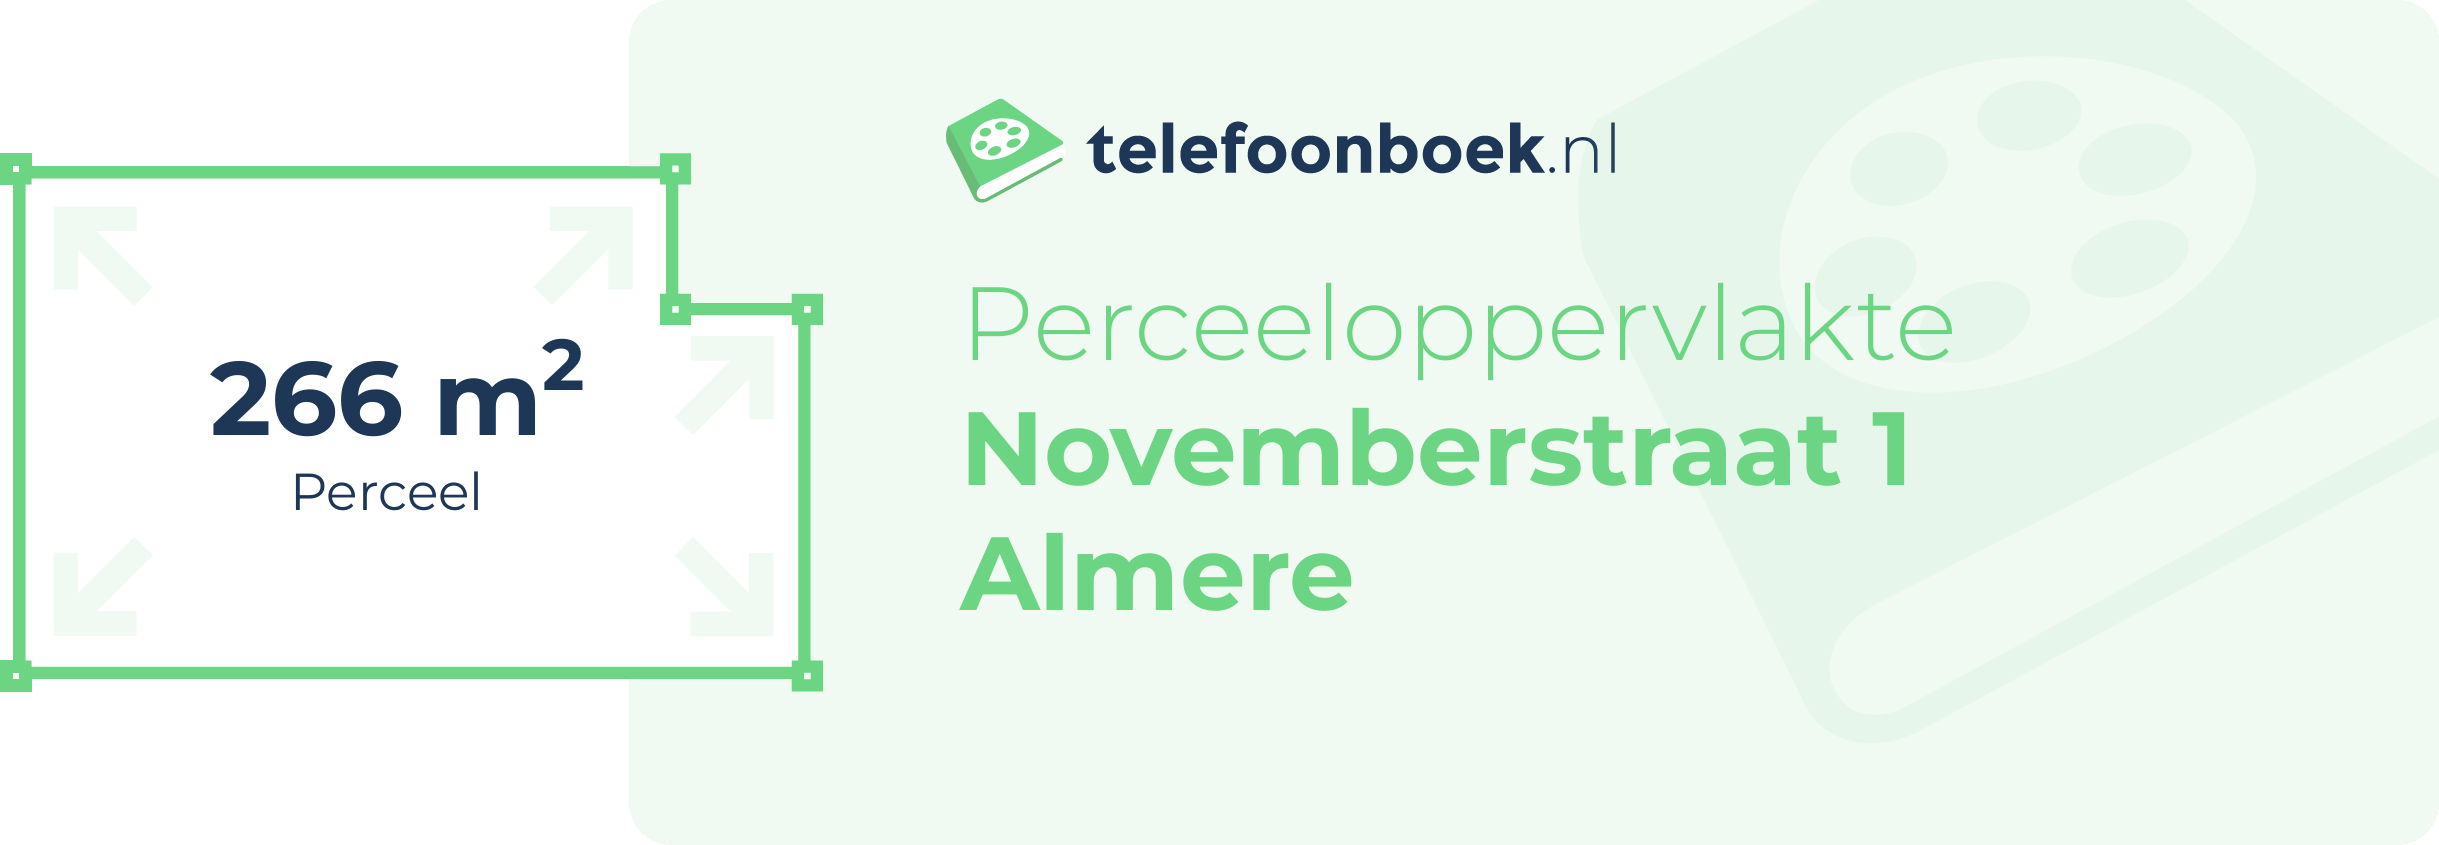 Perceeloppervlakte Novemberstraat 1 Almere